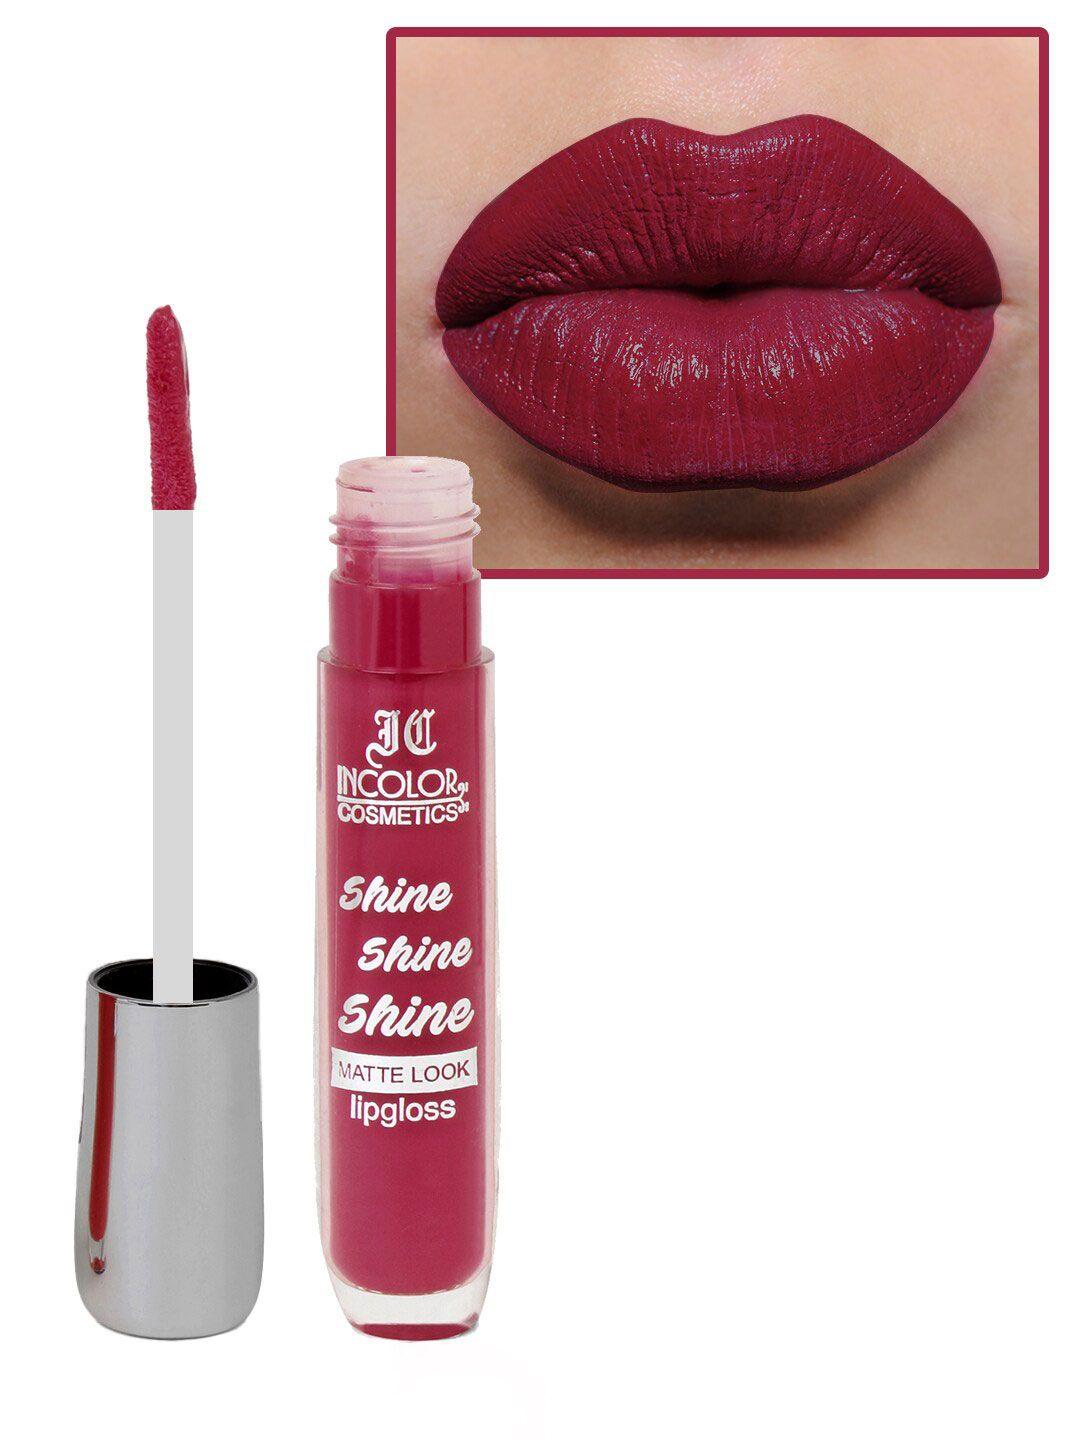 incolor-shine-shine-shine-long-wearing-lightweight-matte-look-lip-gloss-8ml---shade-12